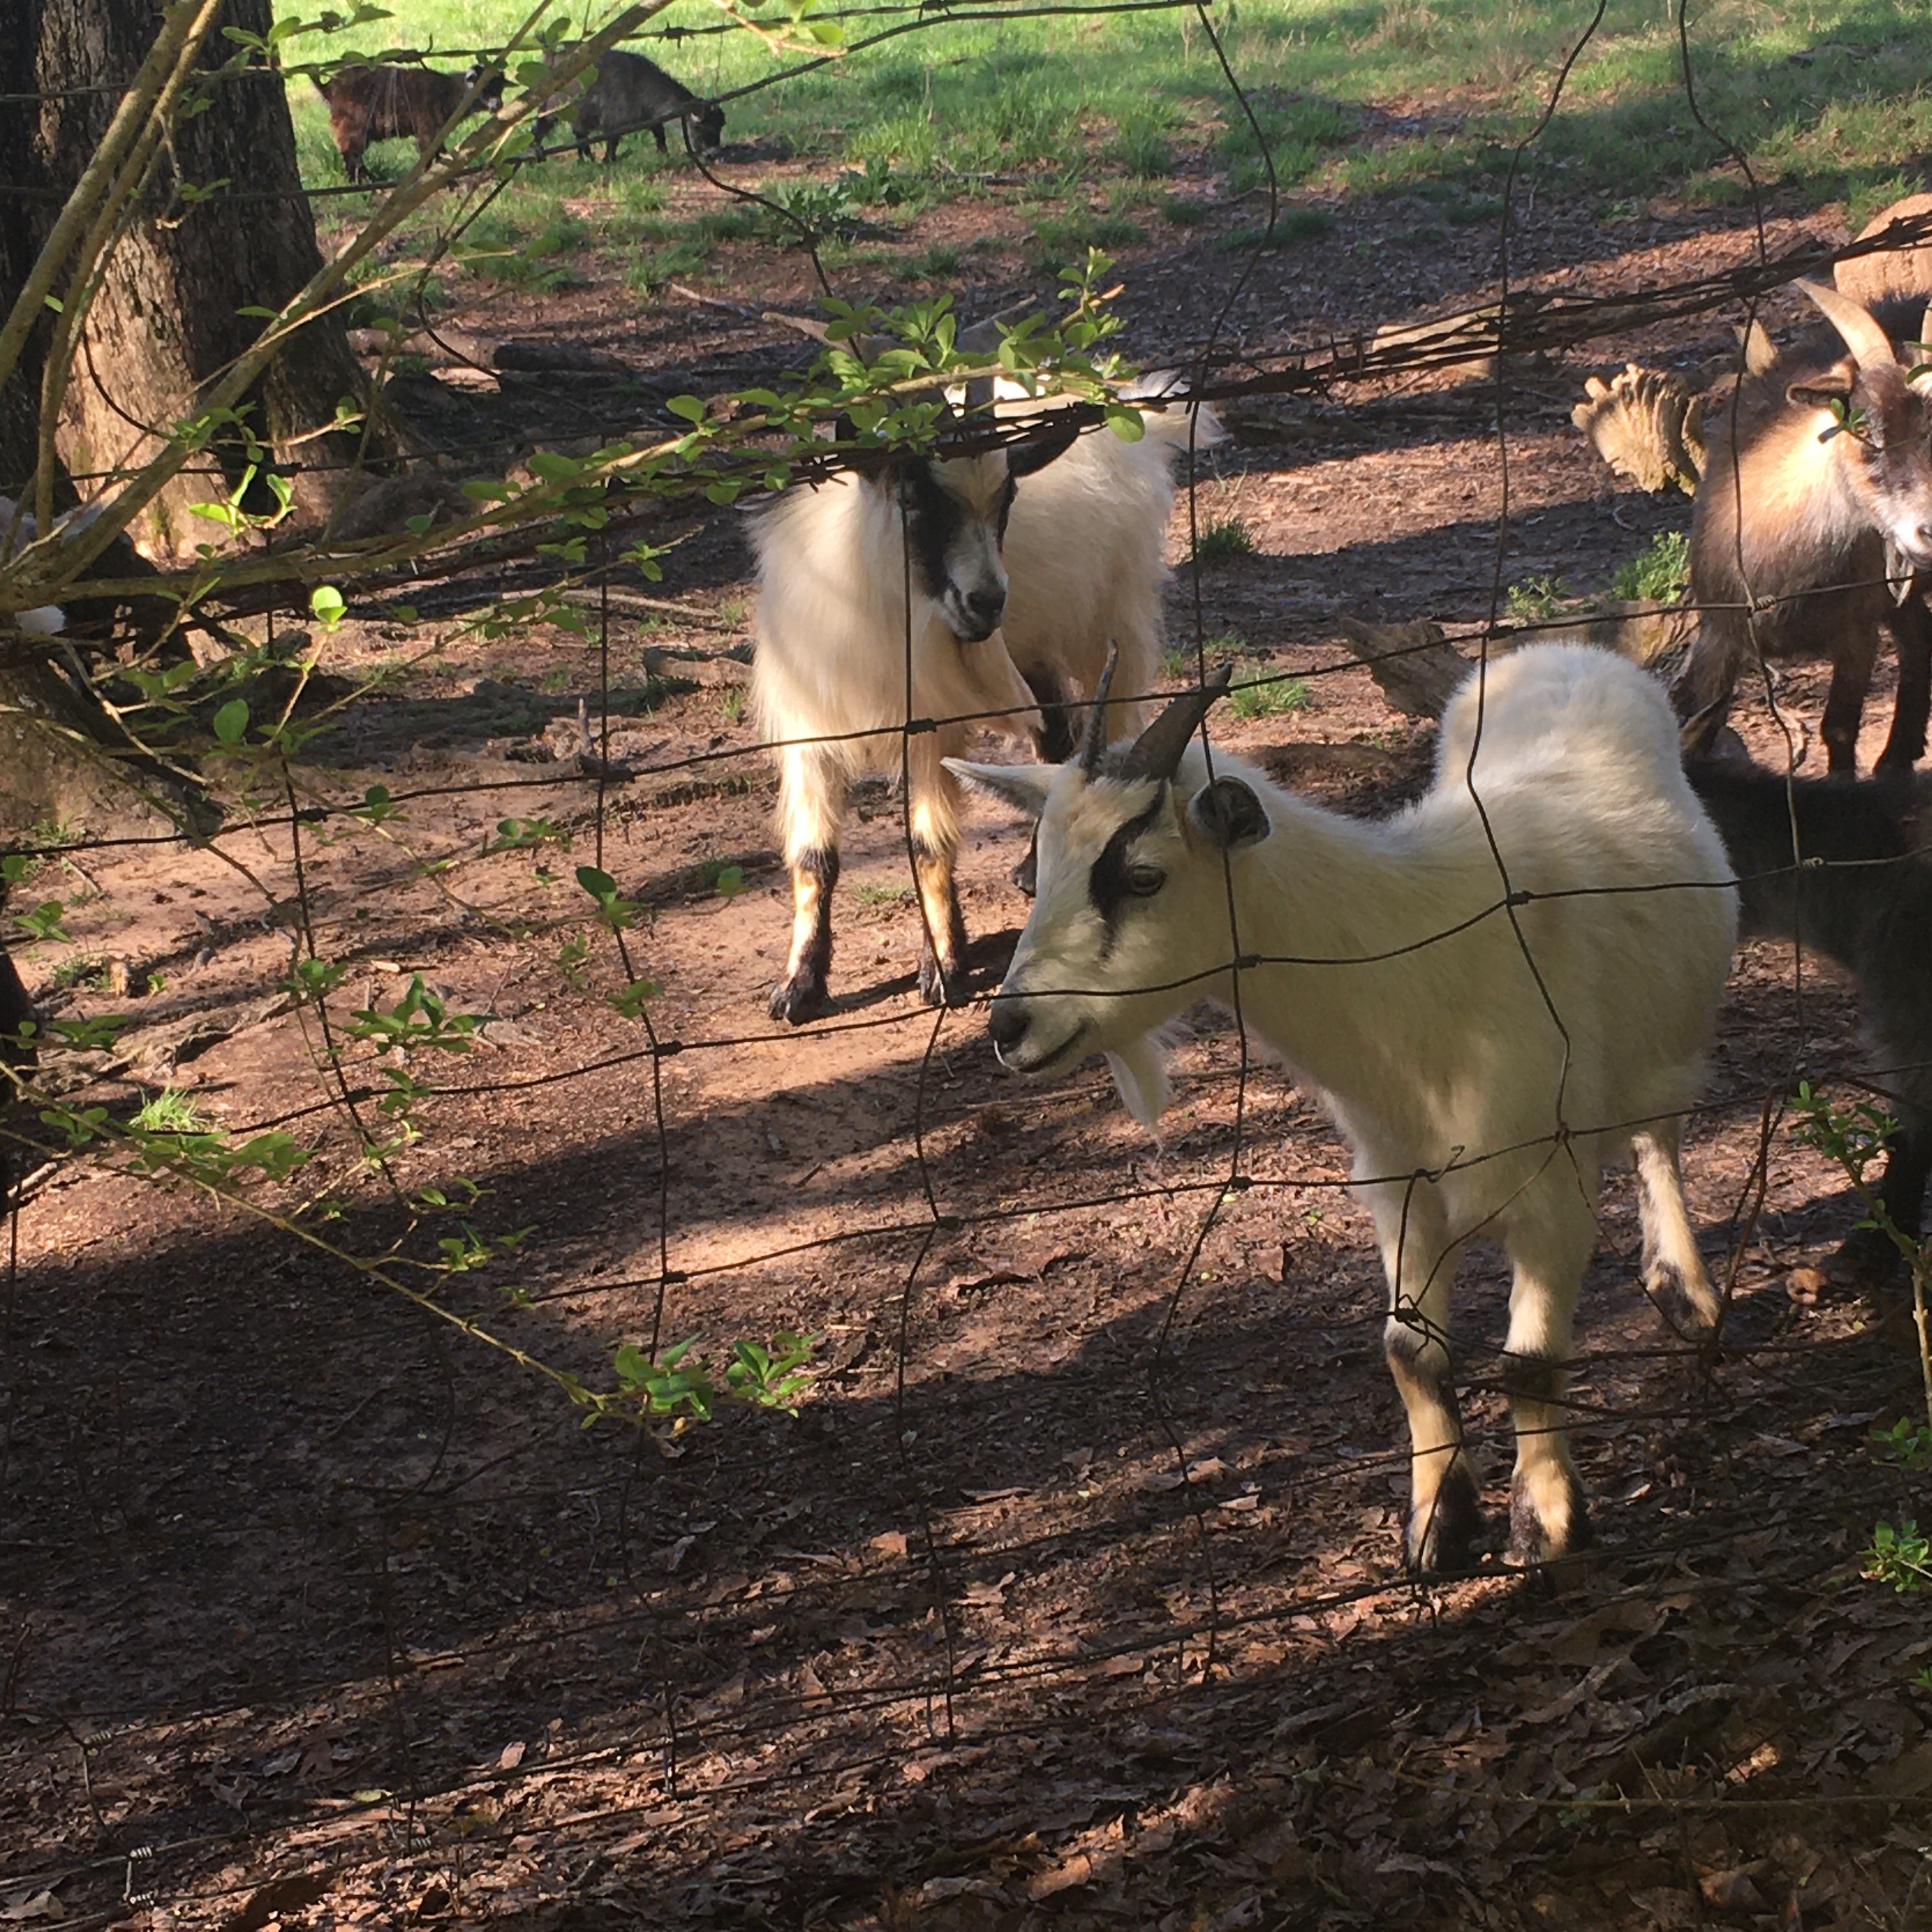 Neighbor's goats